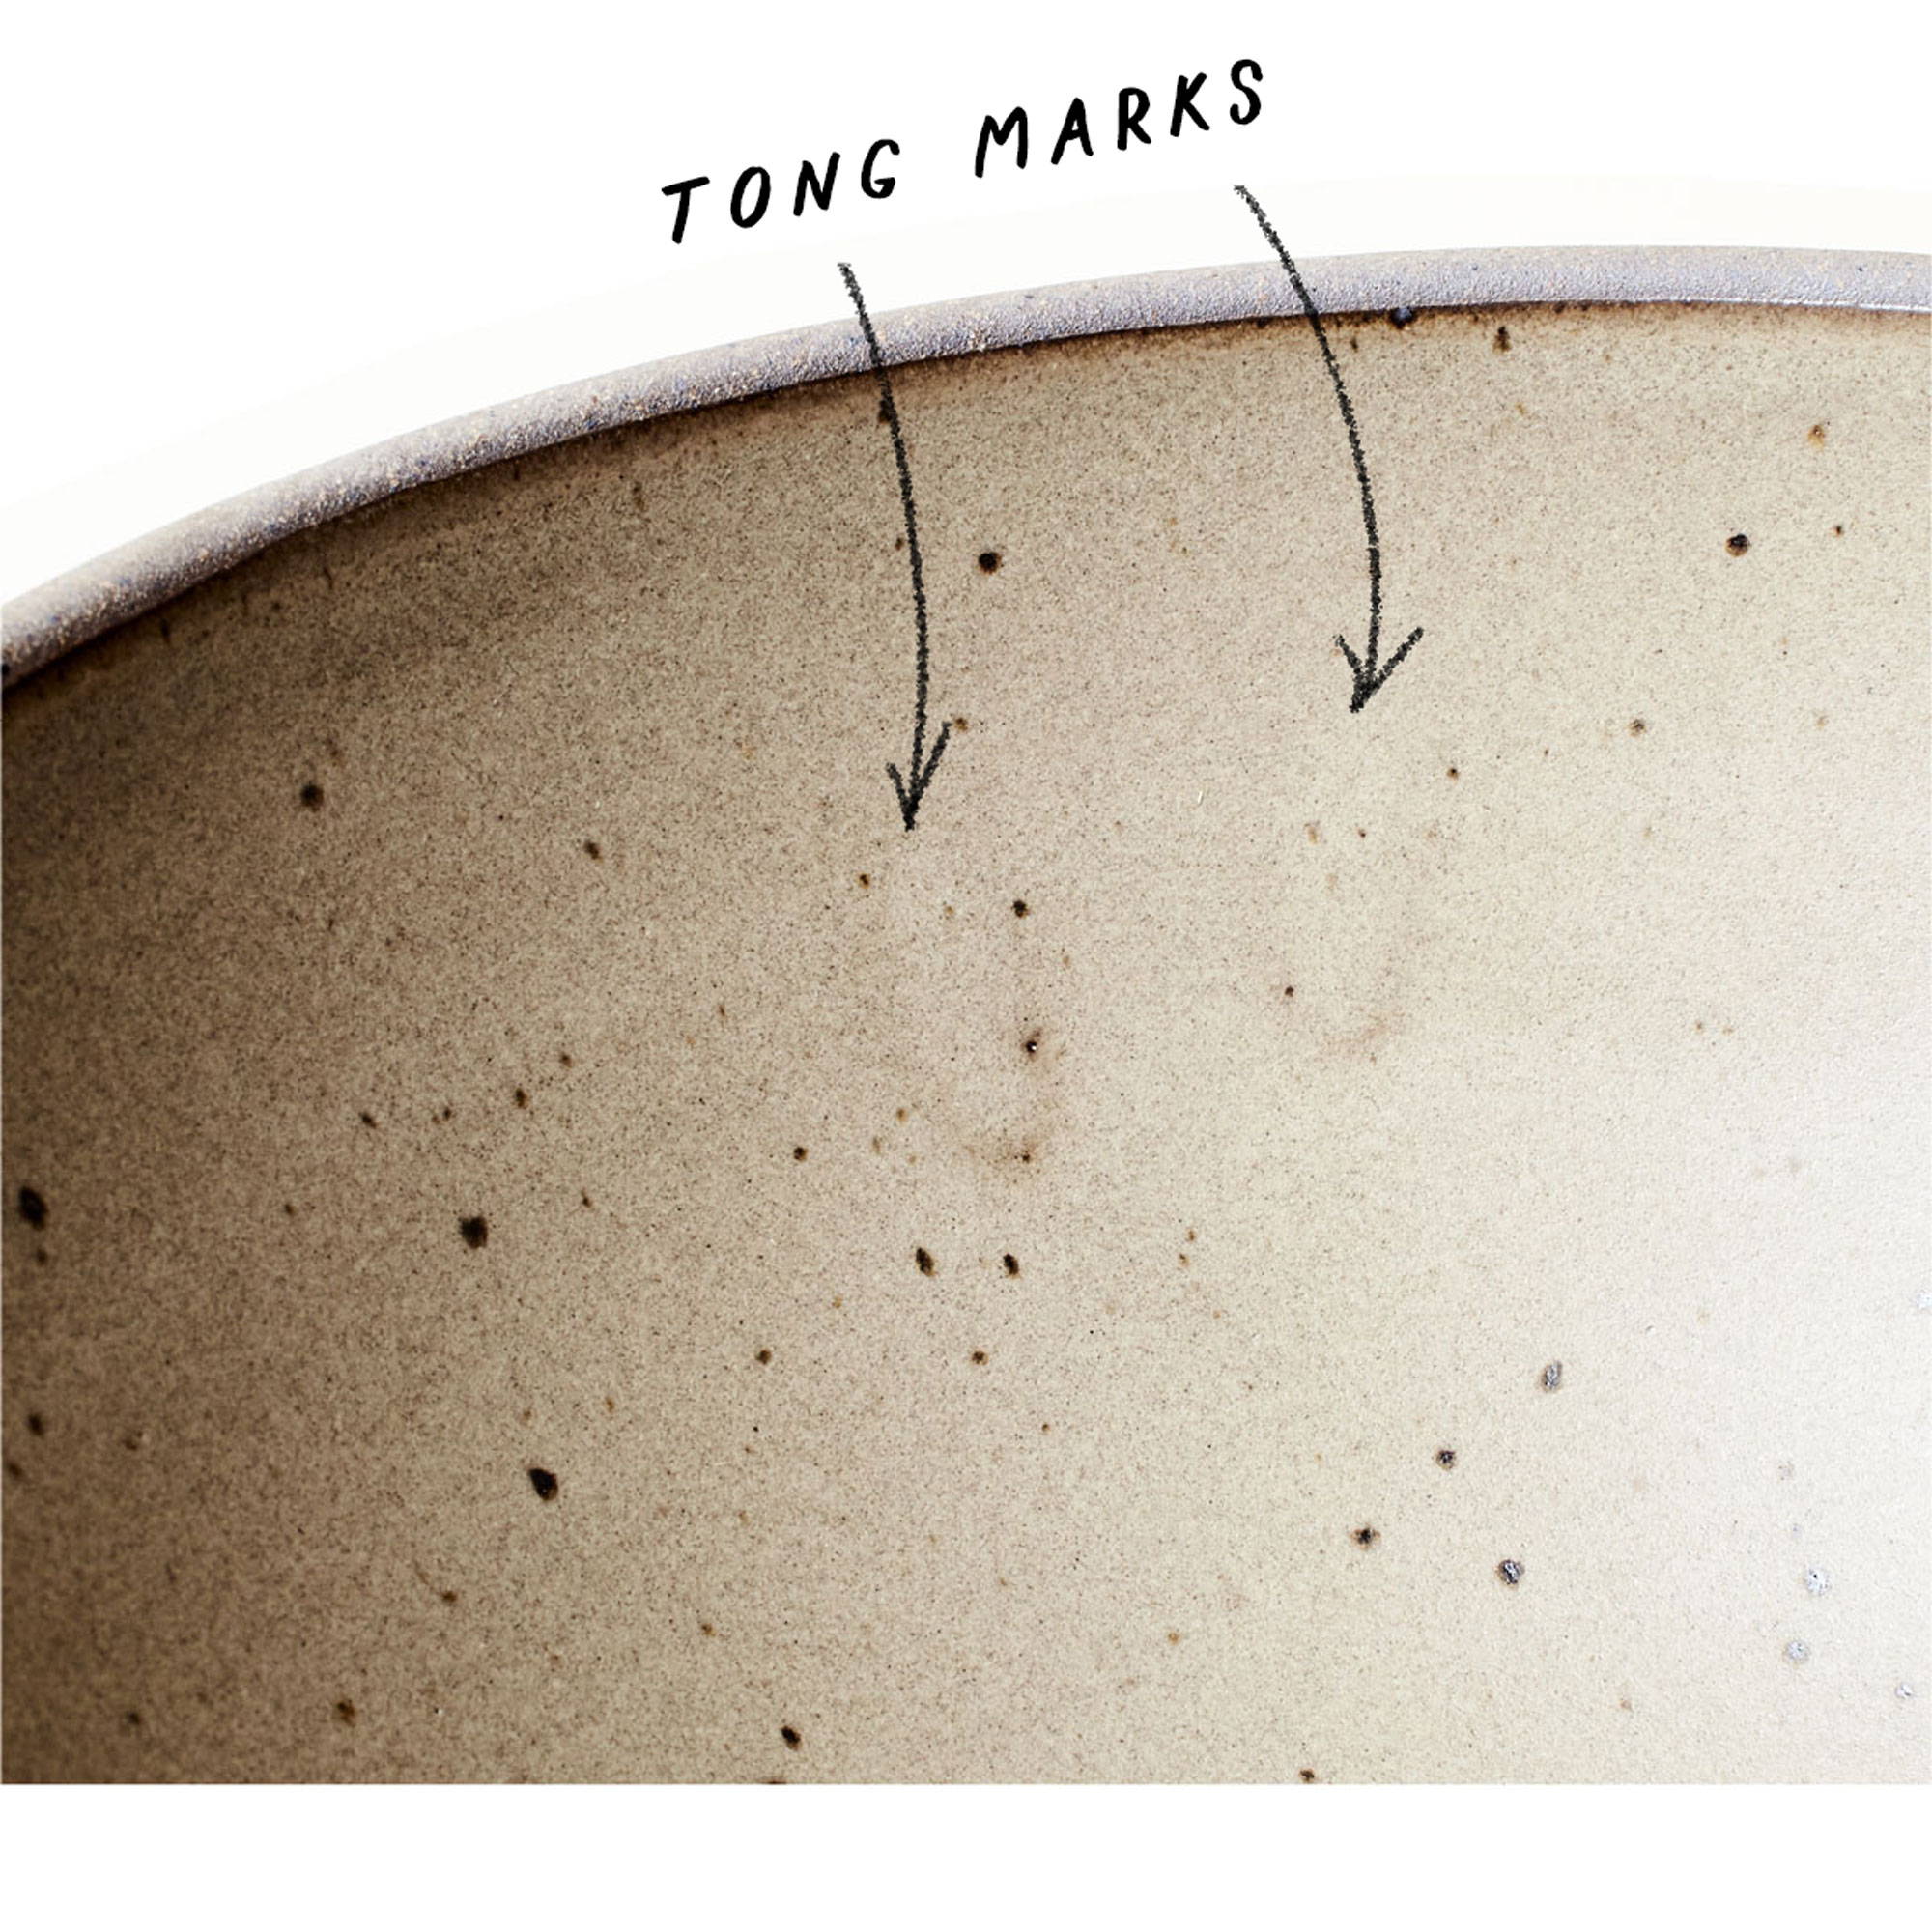 Tong Marks on an East Fork Morel bowl